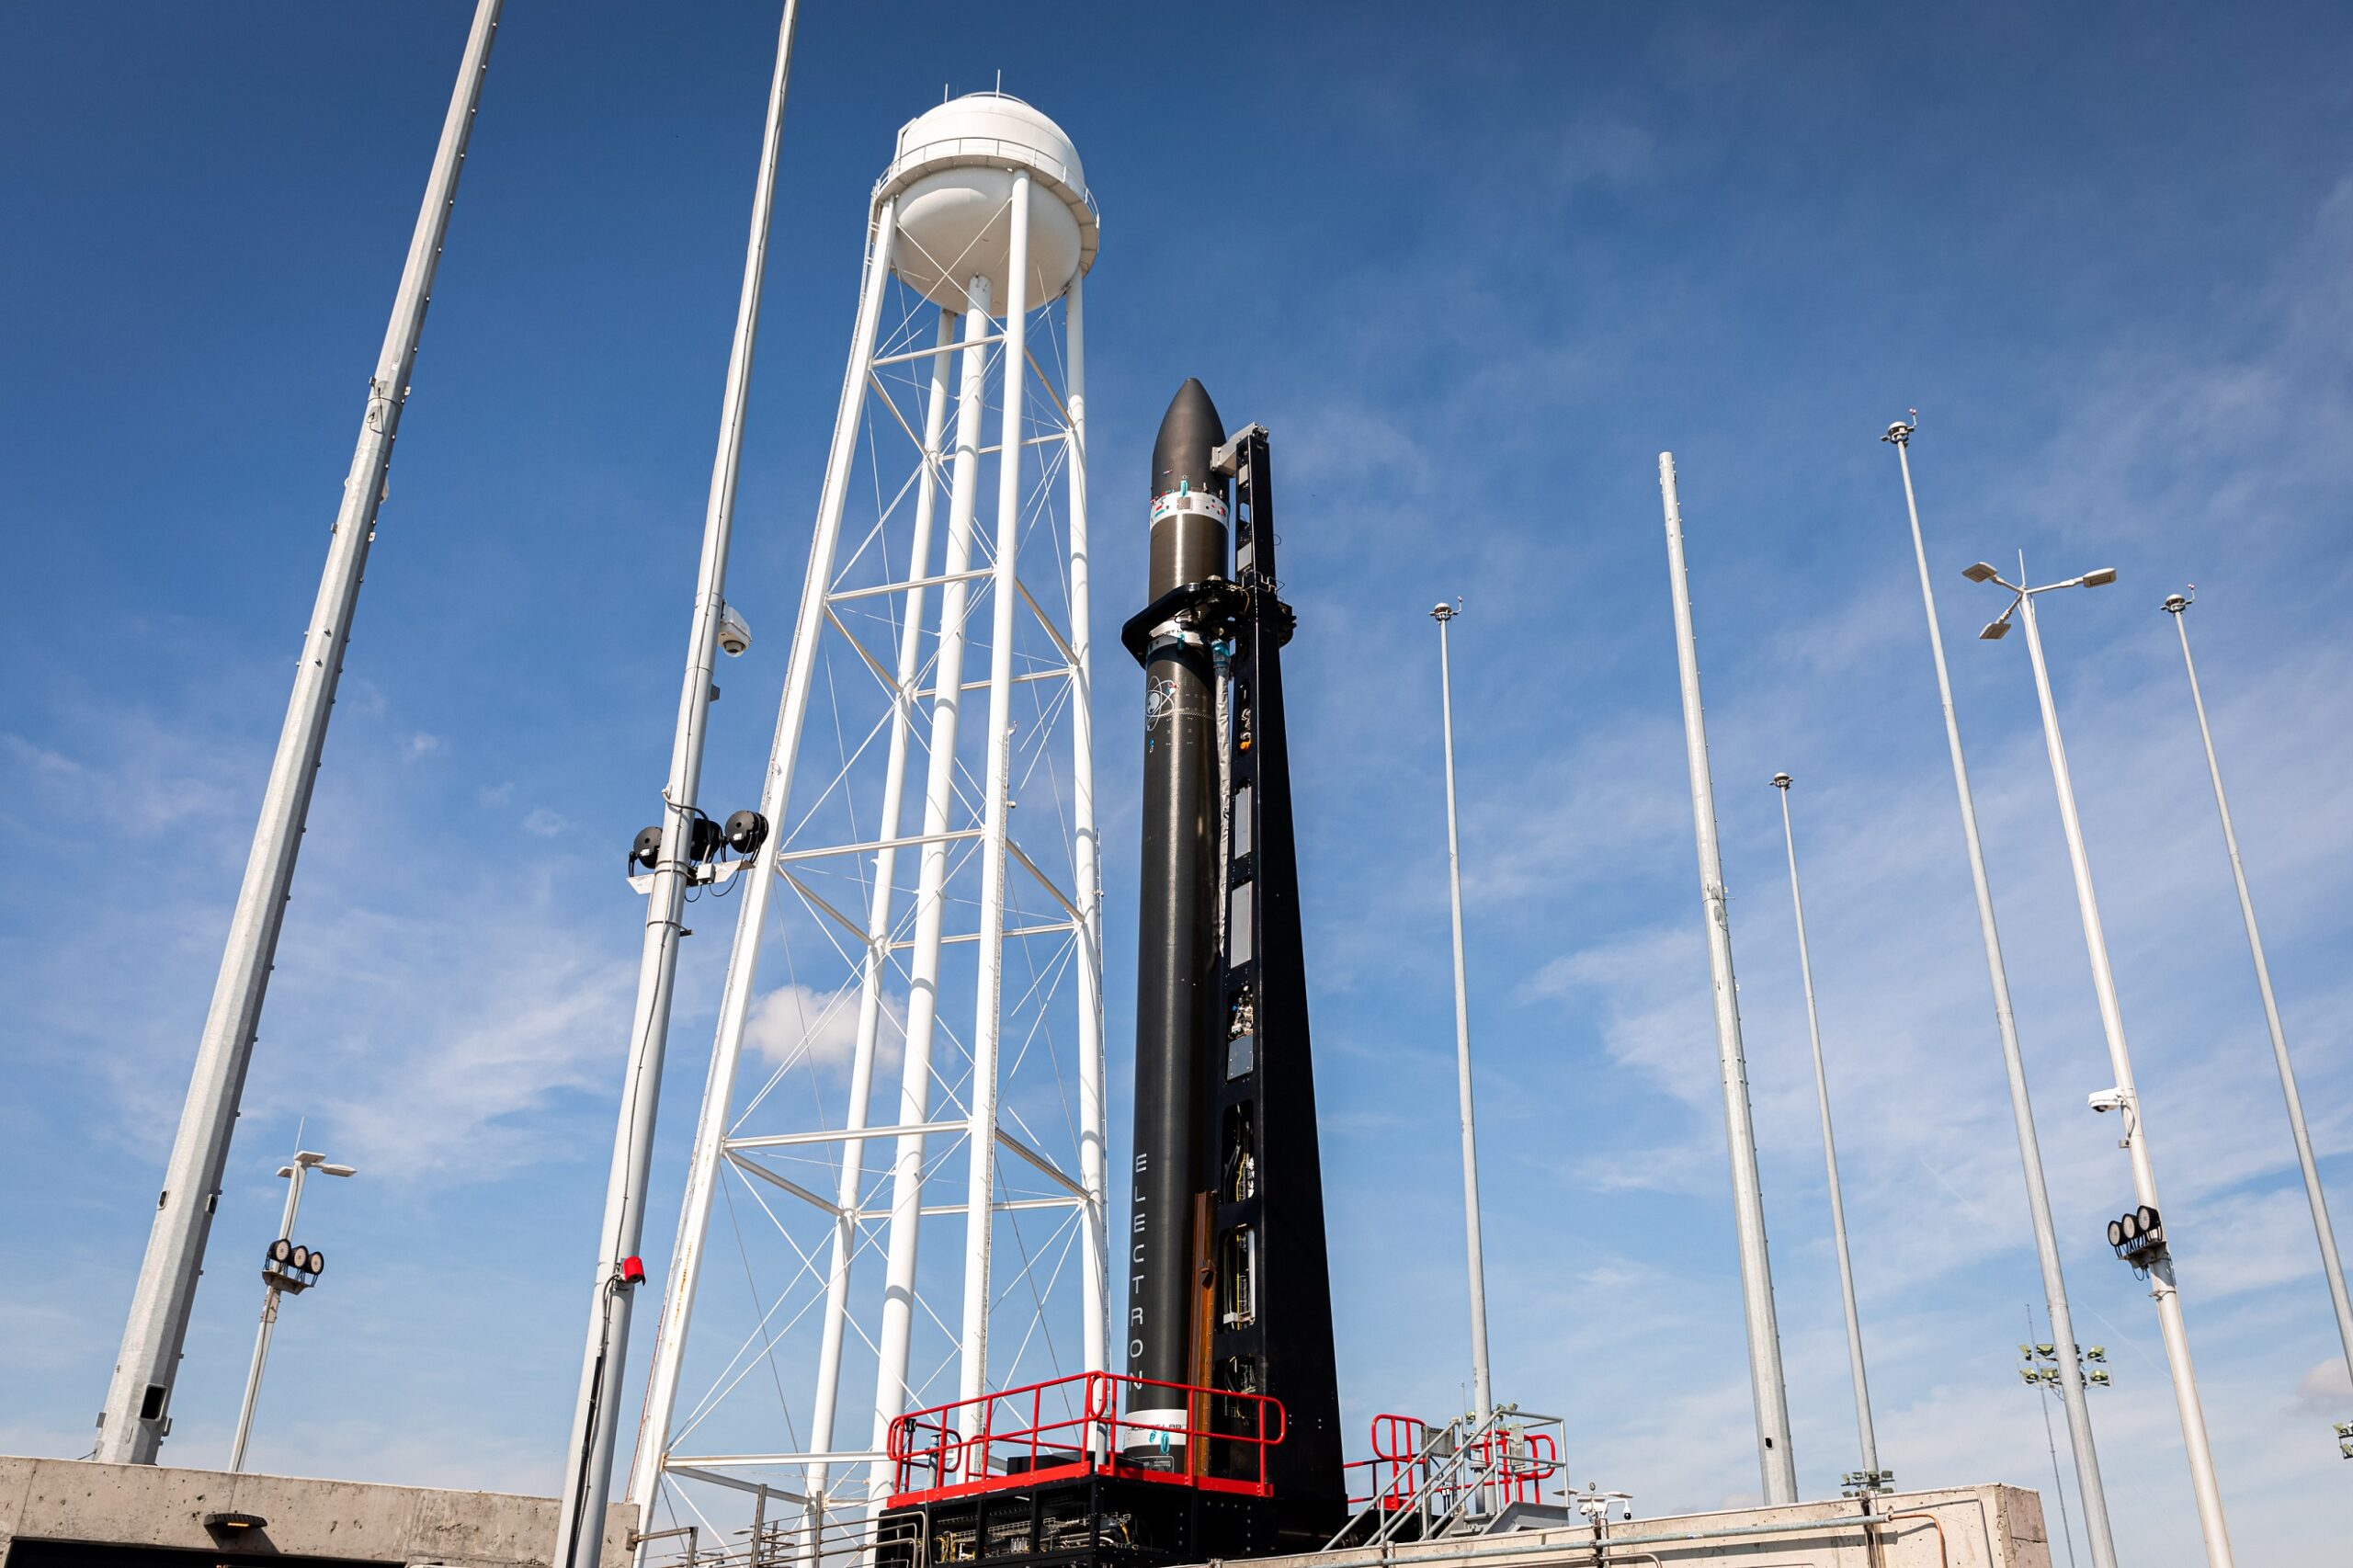 2022’s Virginia Rocket Launch to Get NAFTU Certification from NASA